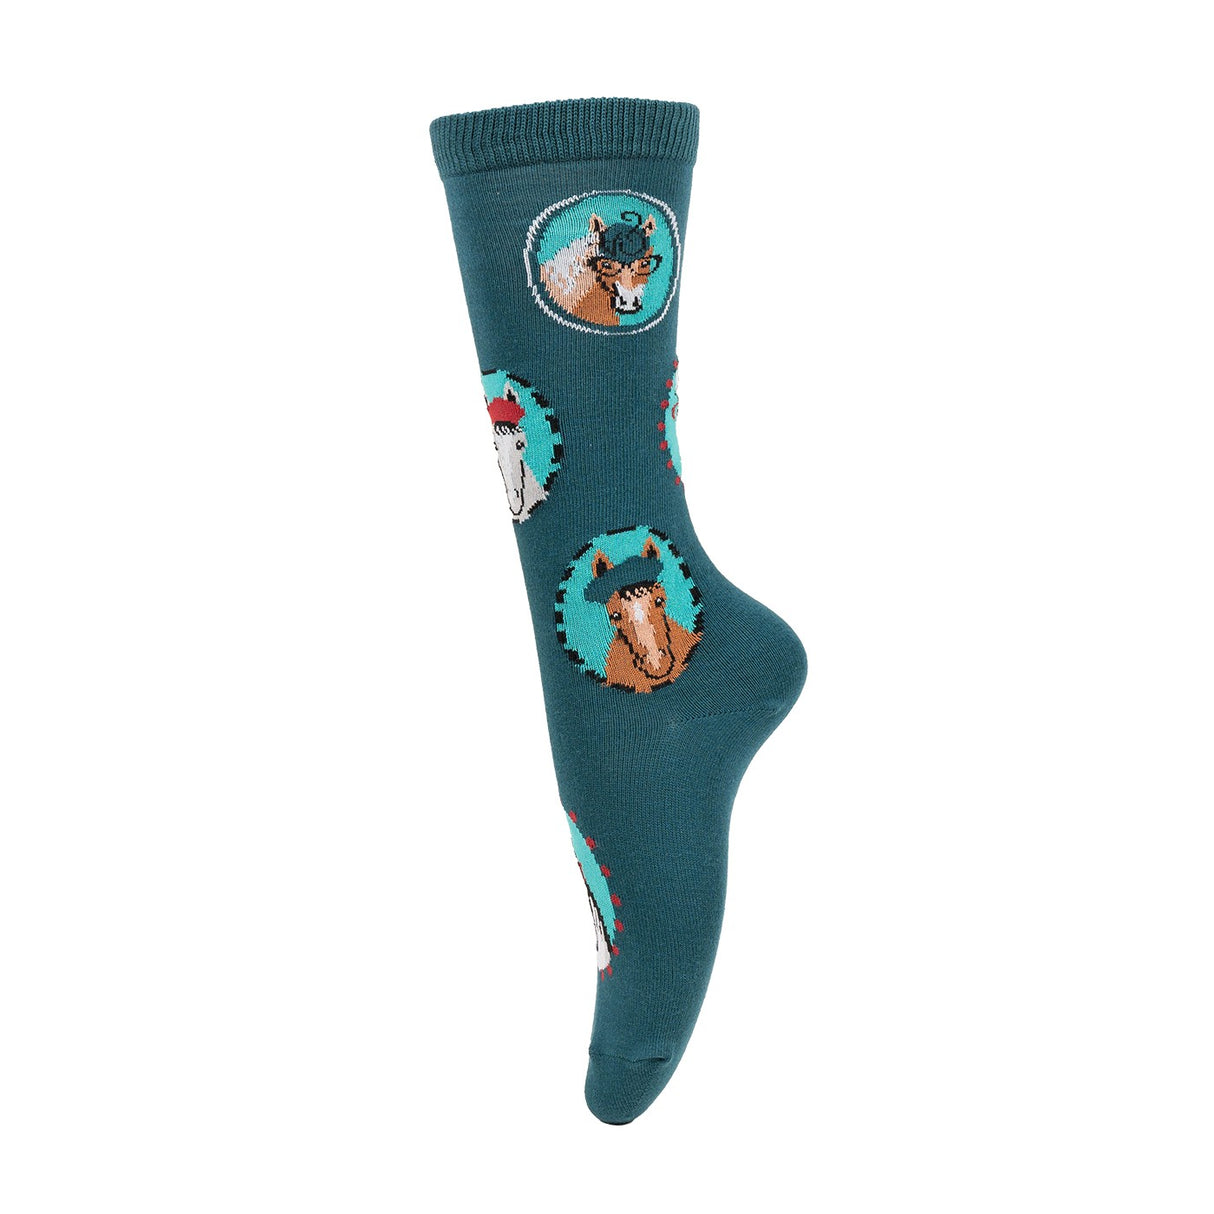 Sock It To Me & FWS Chaussettes hautes Horseing Around exclusives de Sock It To Me - Enfants